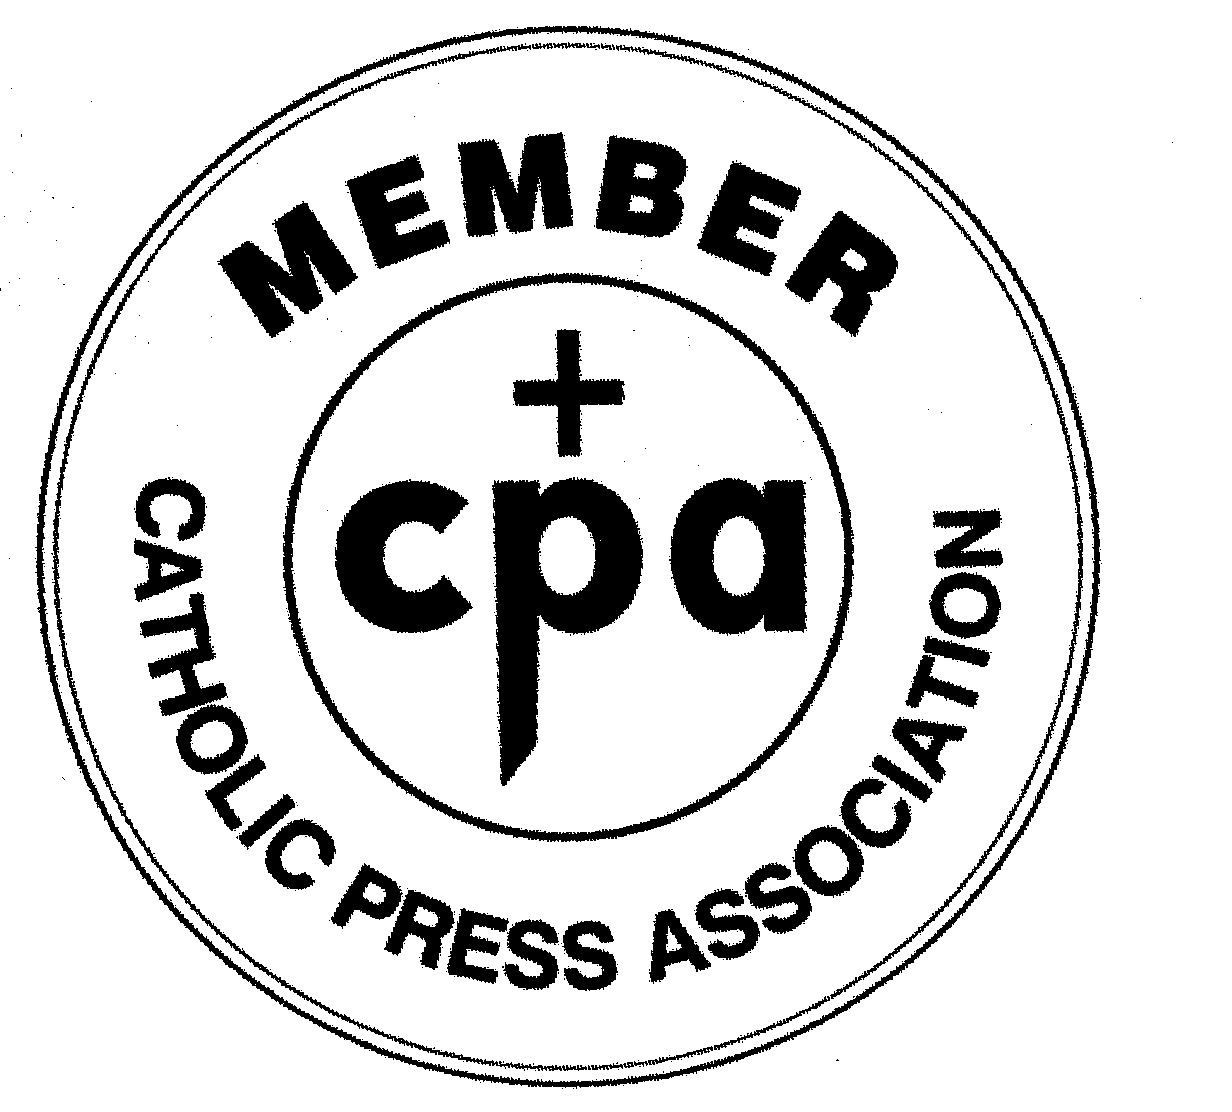 How did they do? National Catholic Press Awards